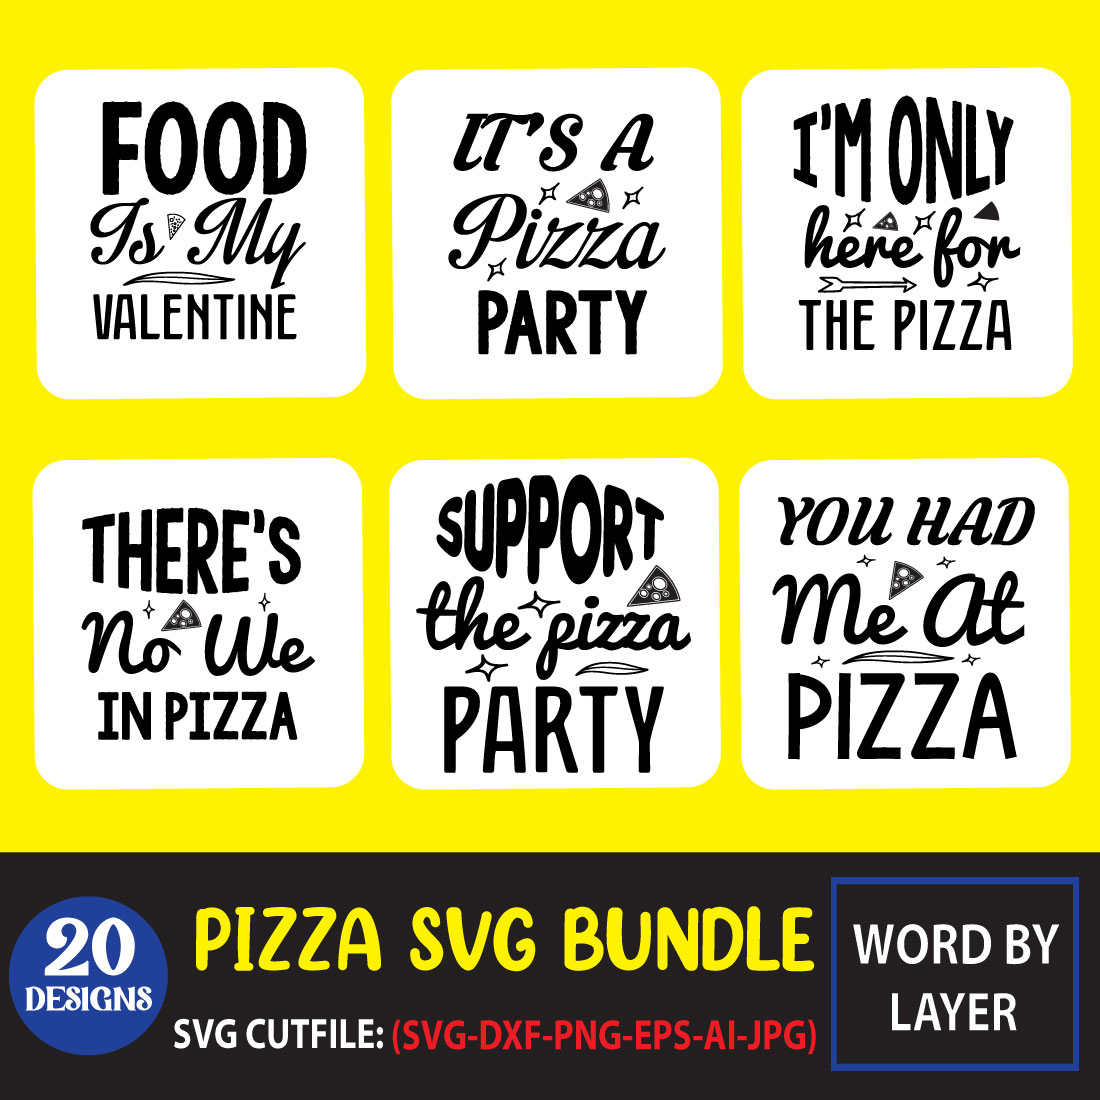 Pizza SVG Bundle cover image.